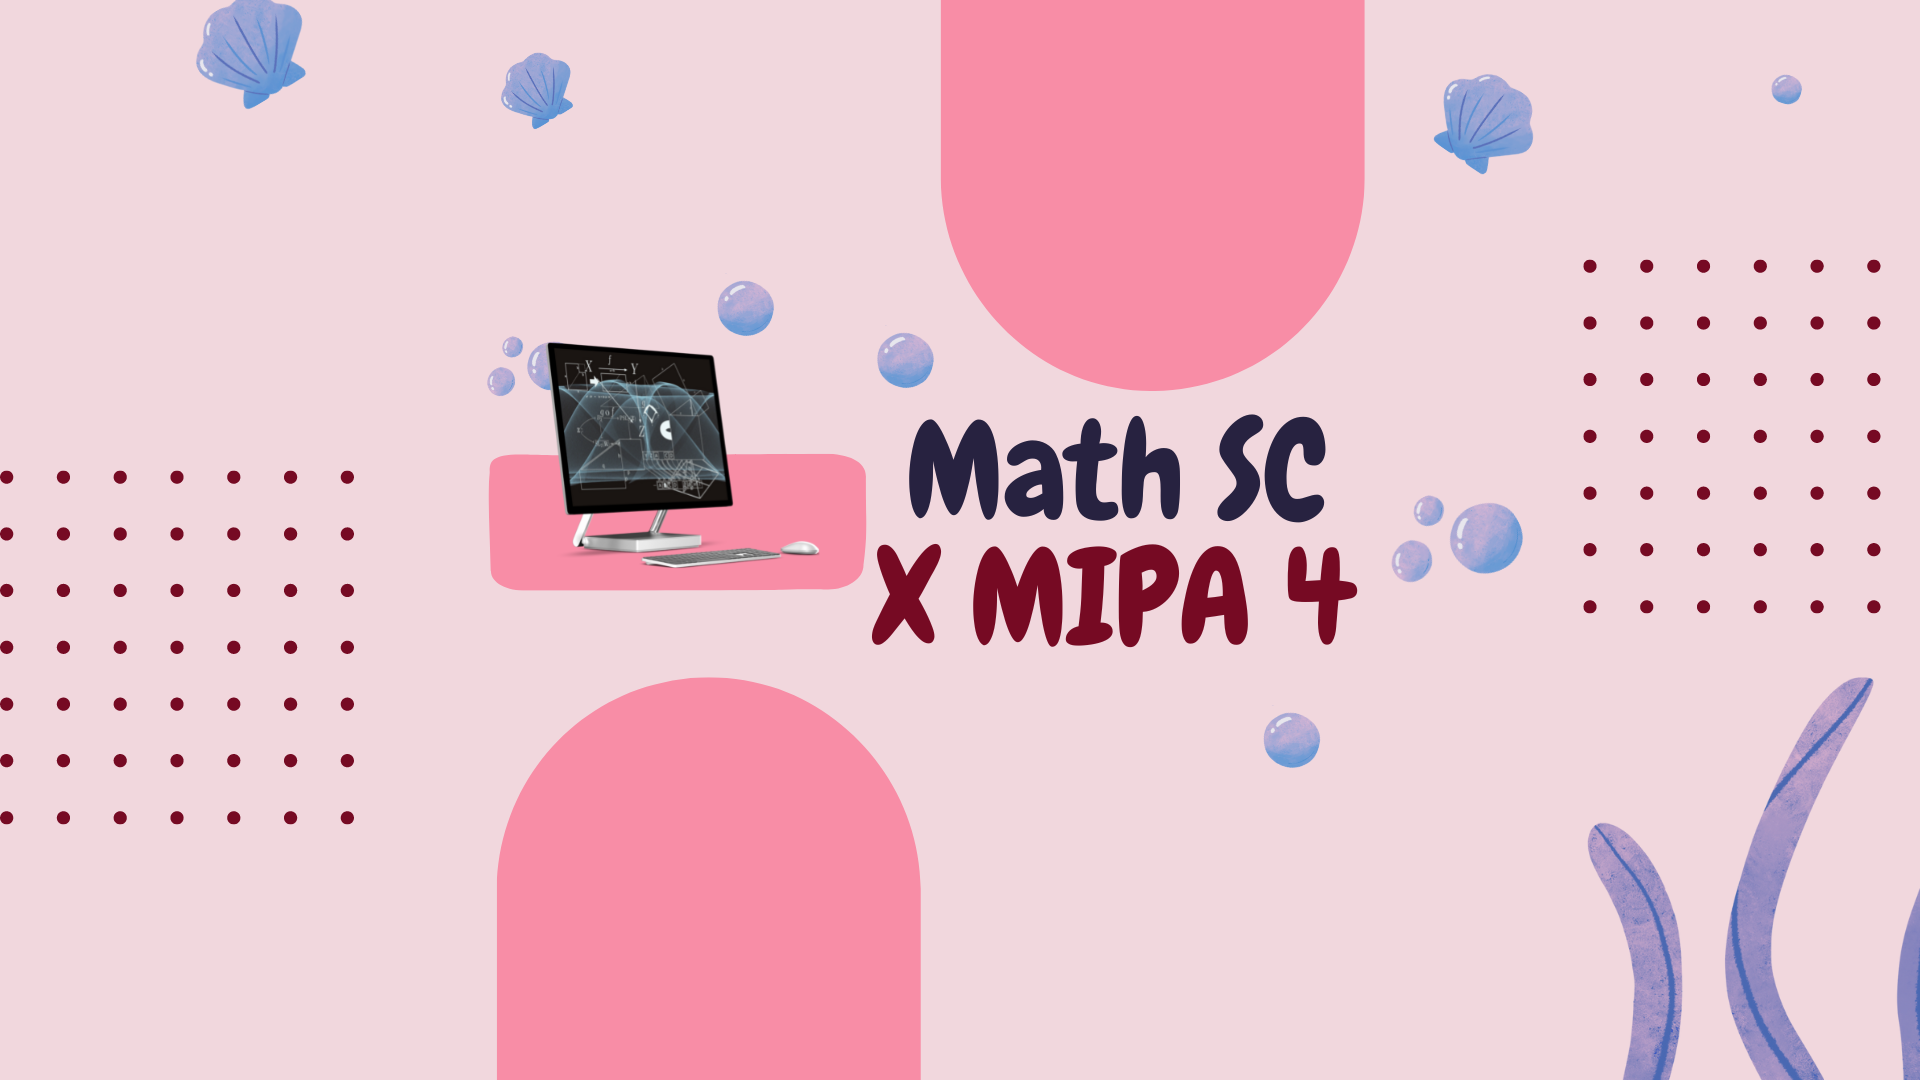 MATH SCIENCE X MIPA 4